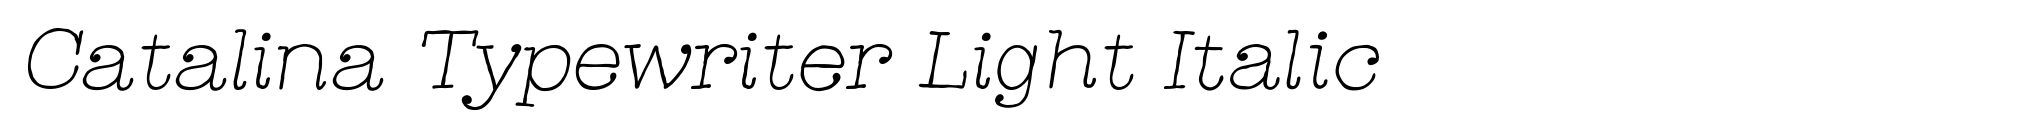 Catalina Typewriter Light Italic image